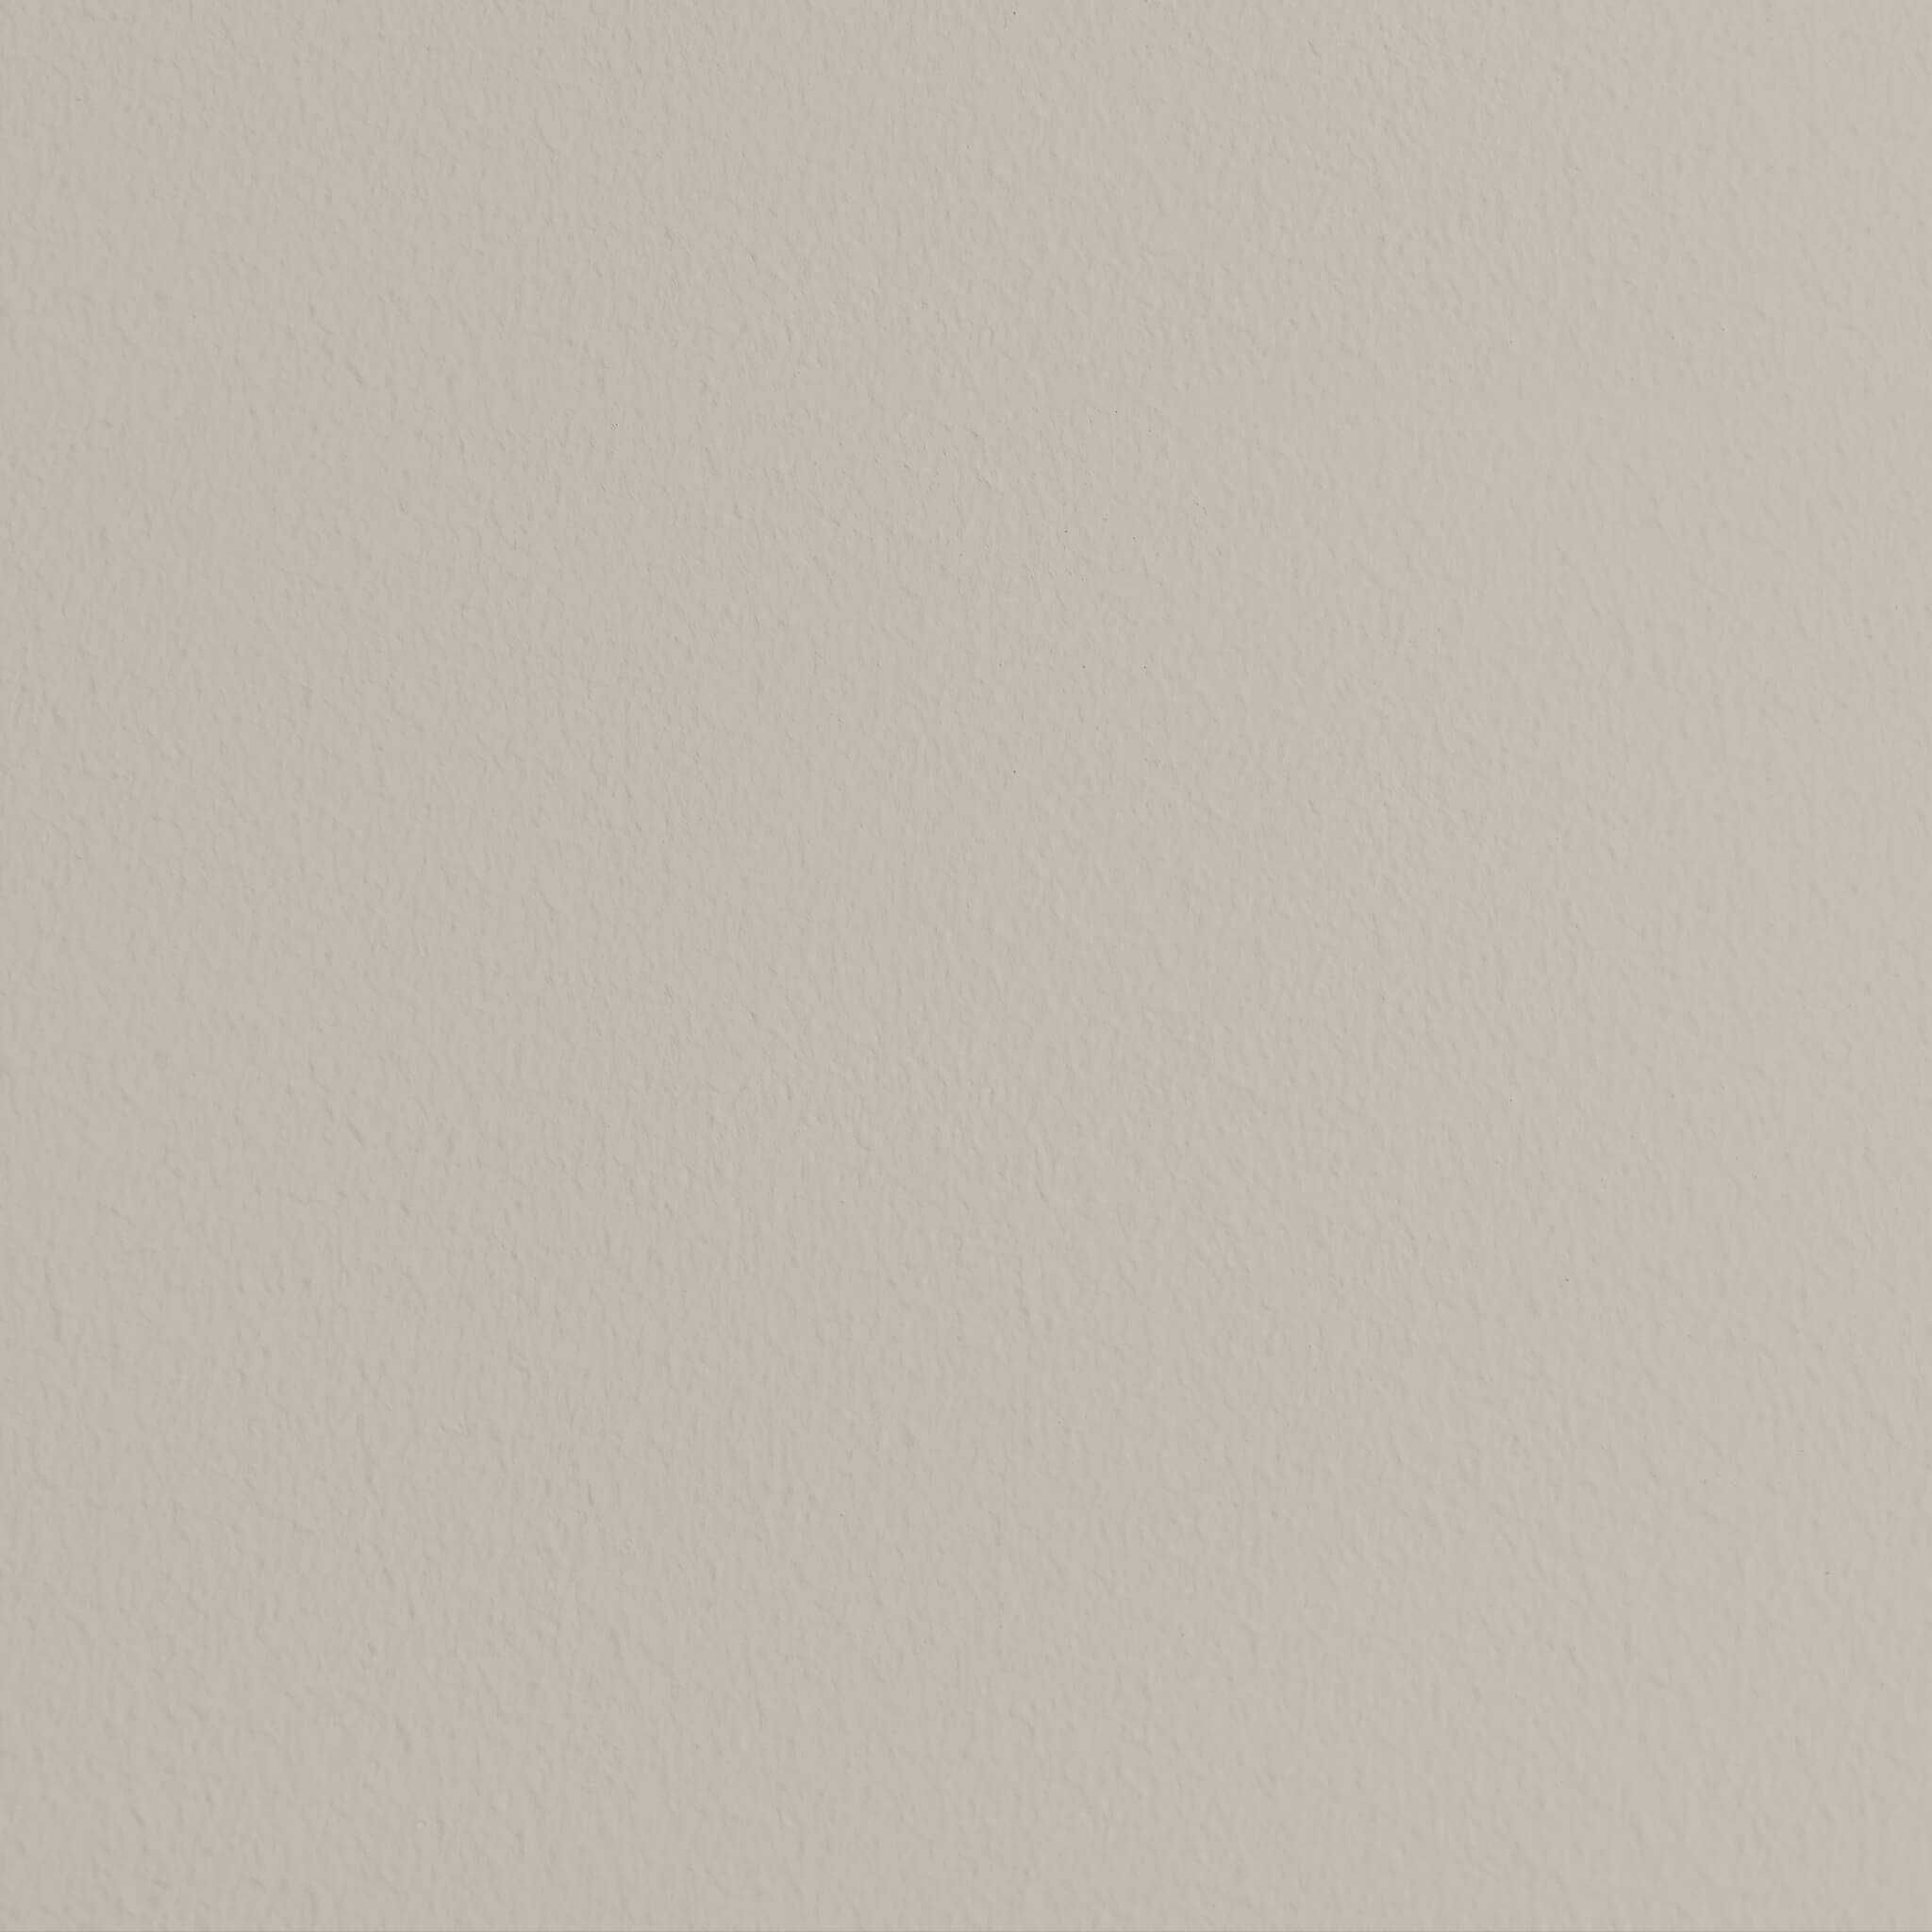 MissPompadour Grey with Linen - The Valuable Wall Paint 1L